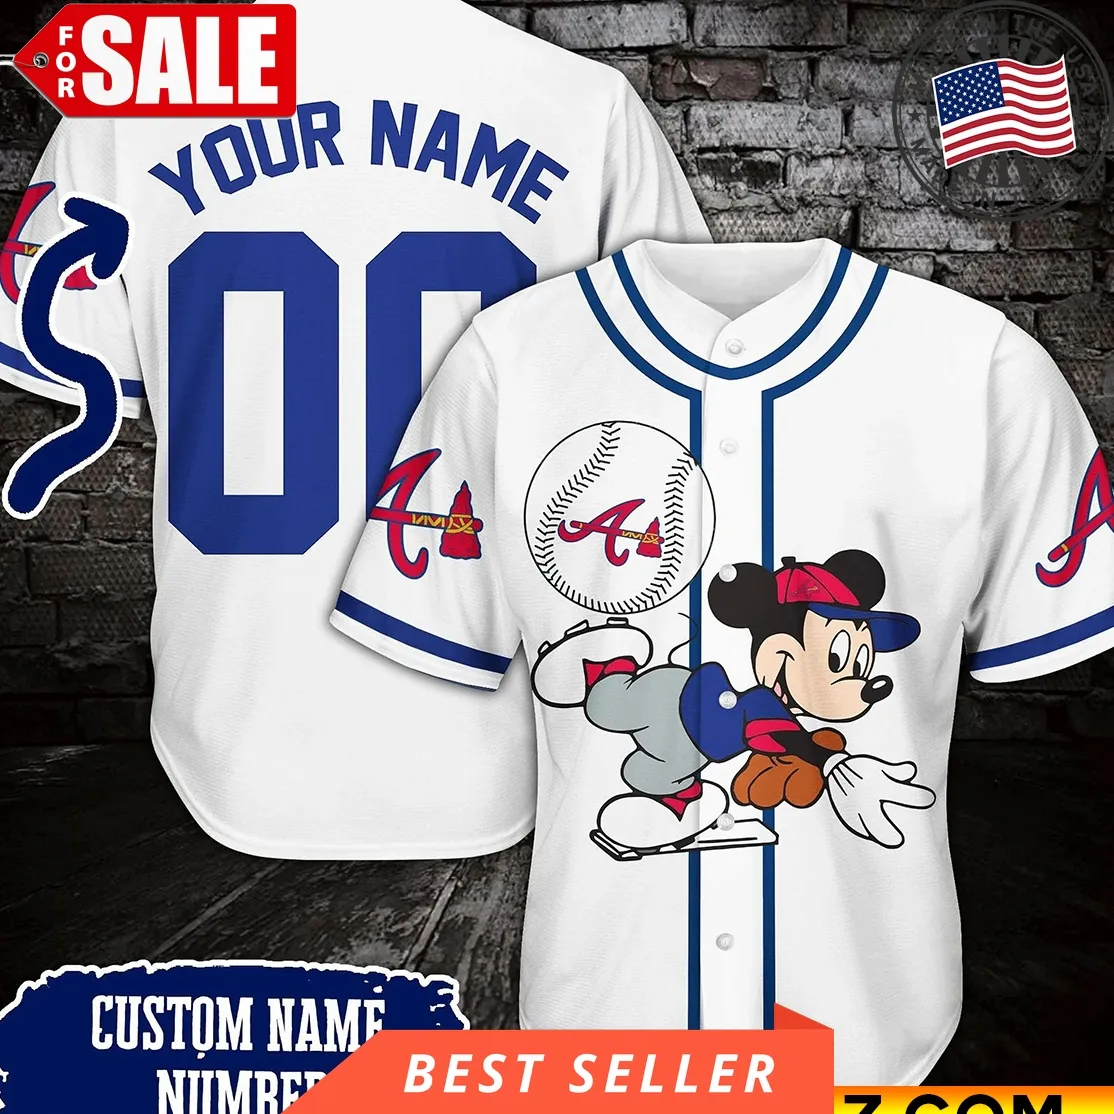 Atlanta Braves Blue MLB Jerseys for sale